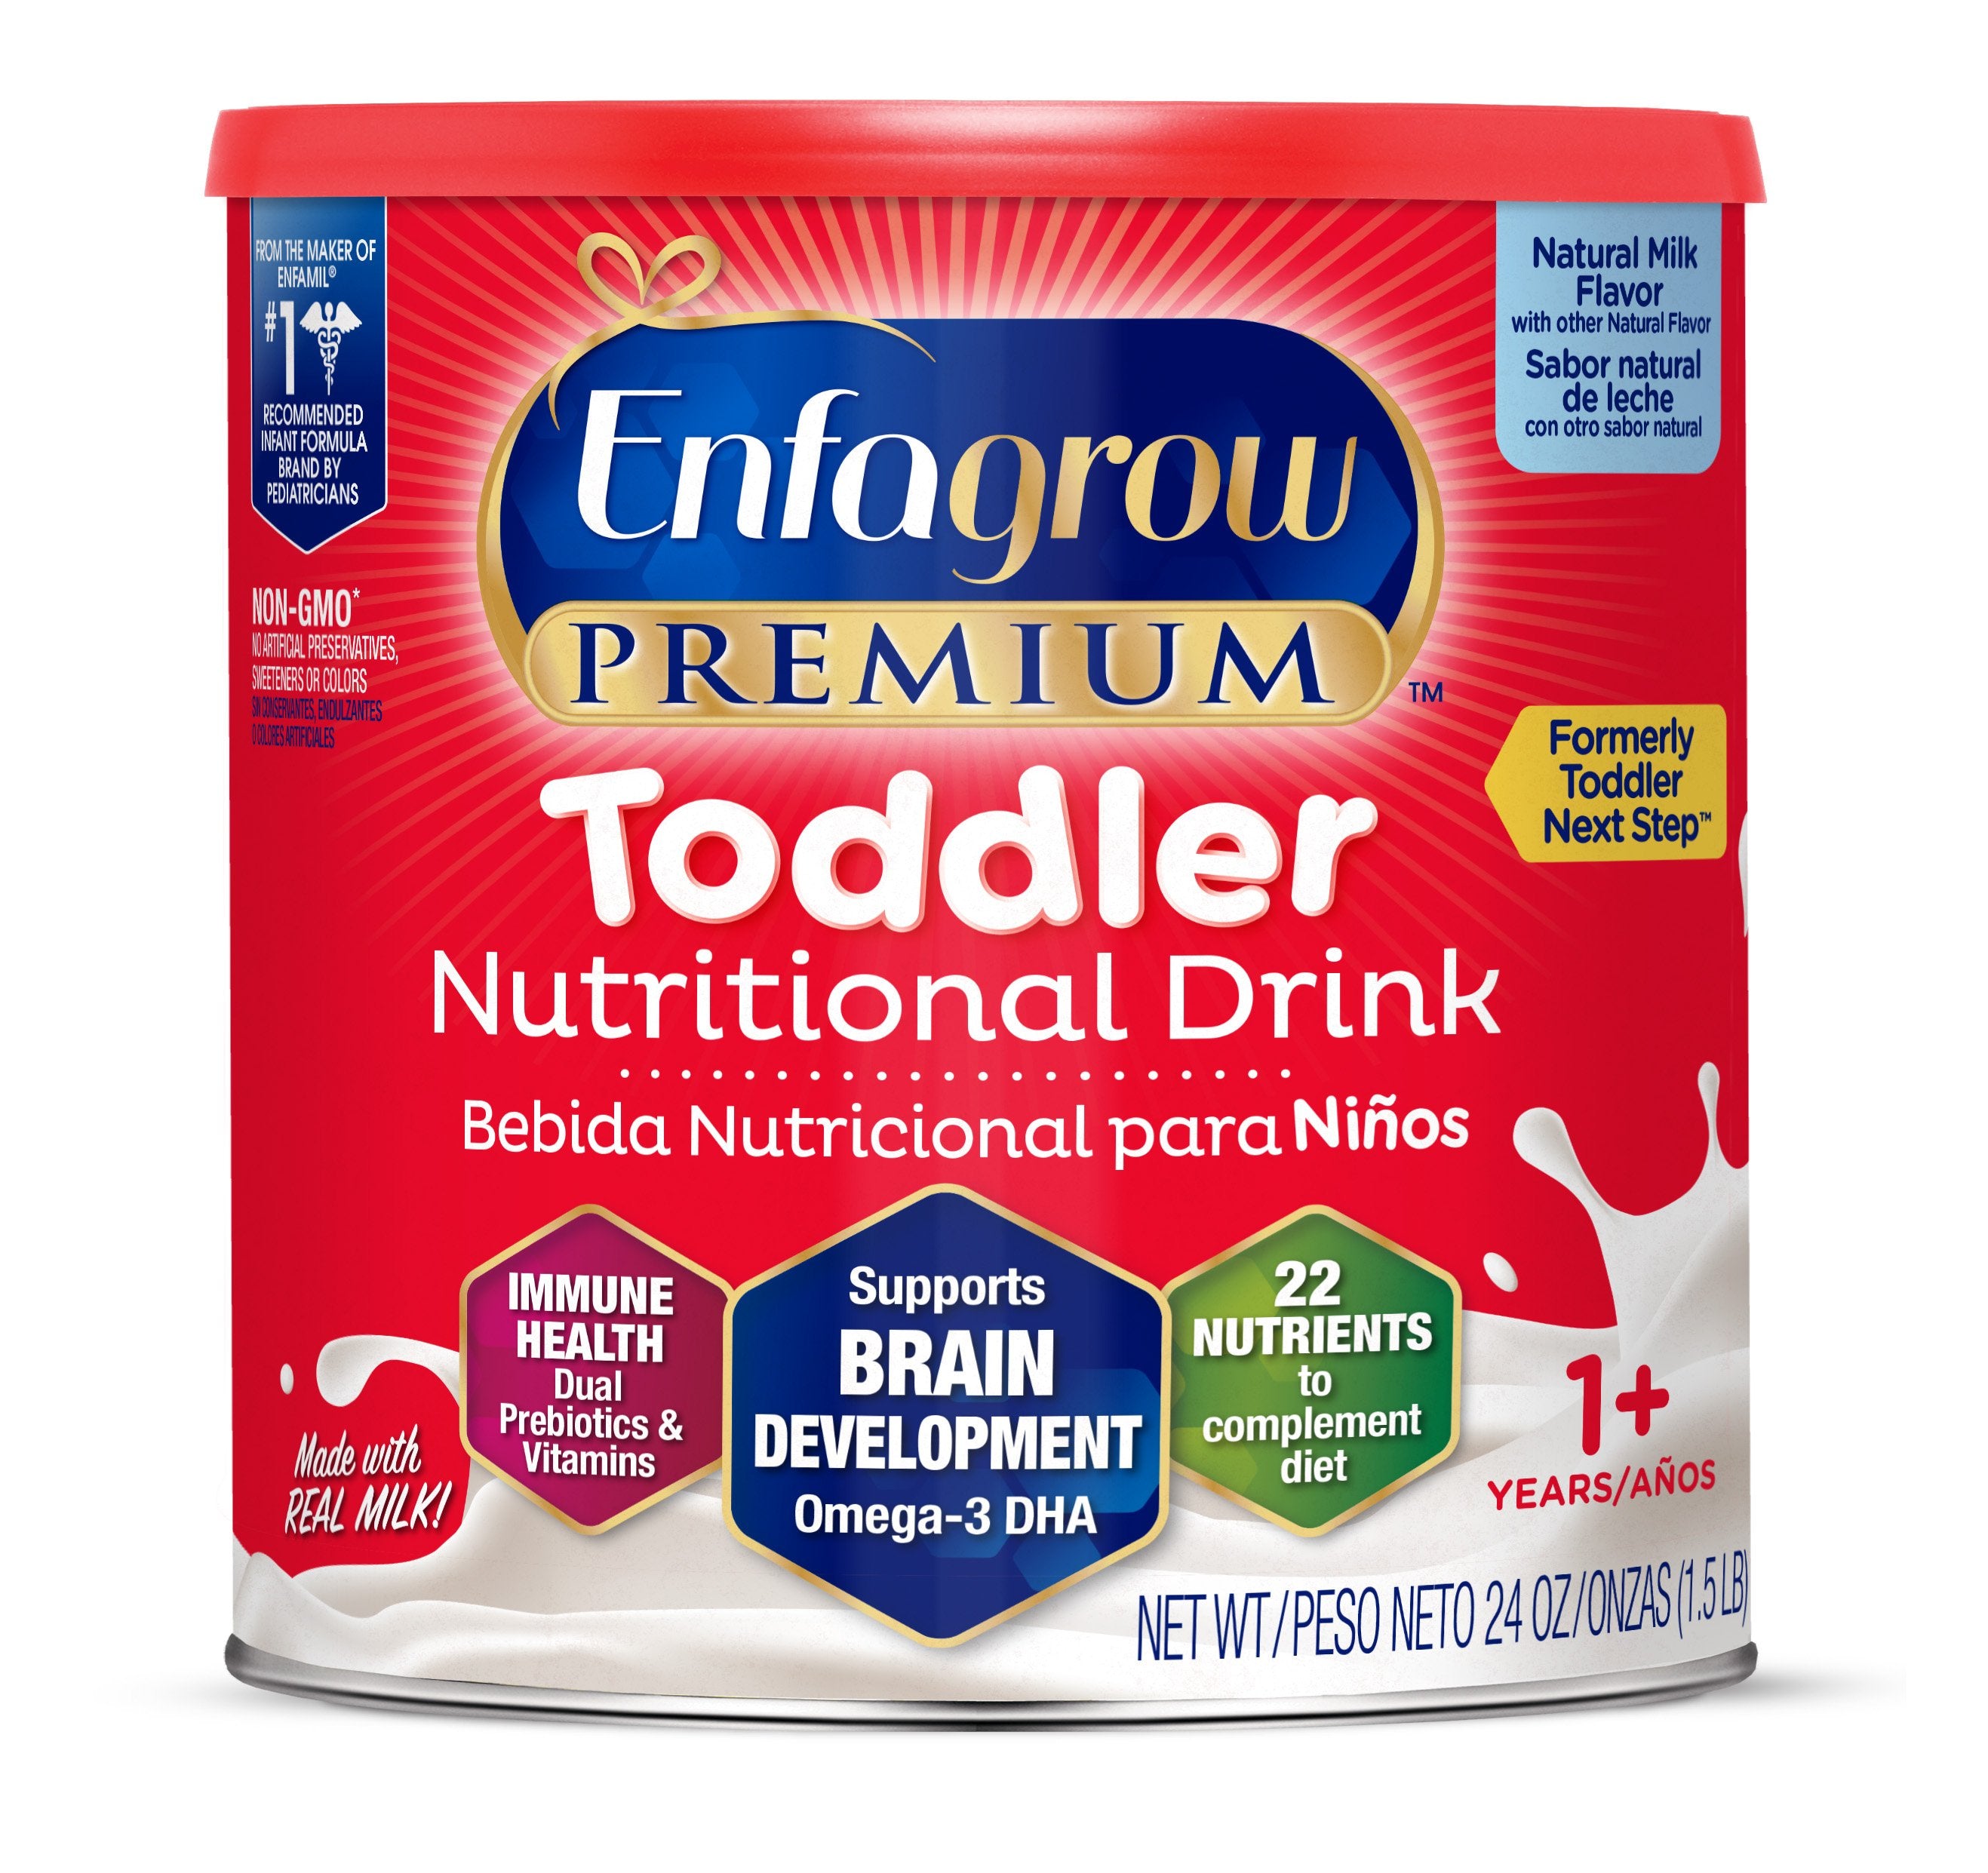 Enfagrow Premium Toddler Next Step Nutritional Drink Powder, Natural Milk, 24 oz. Can -Each